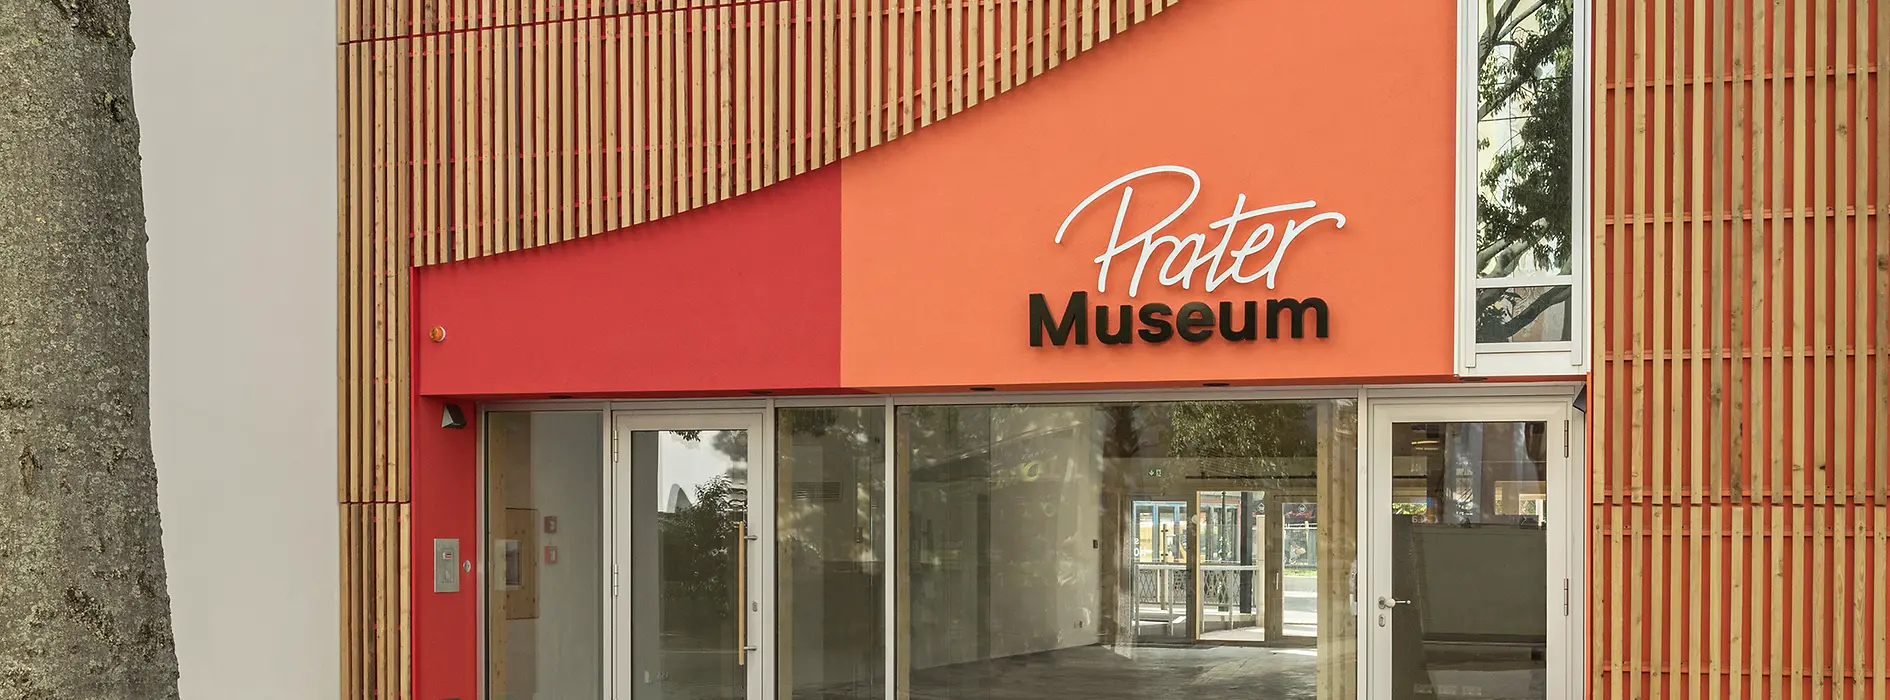 Prater Museum, exterior view, entrance